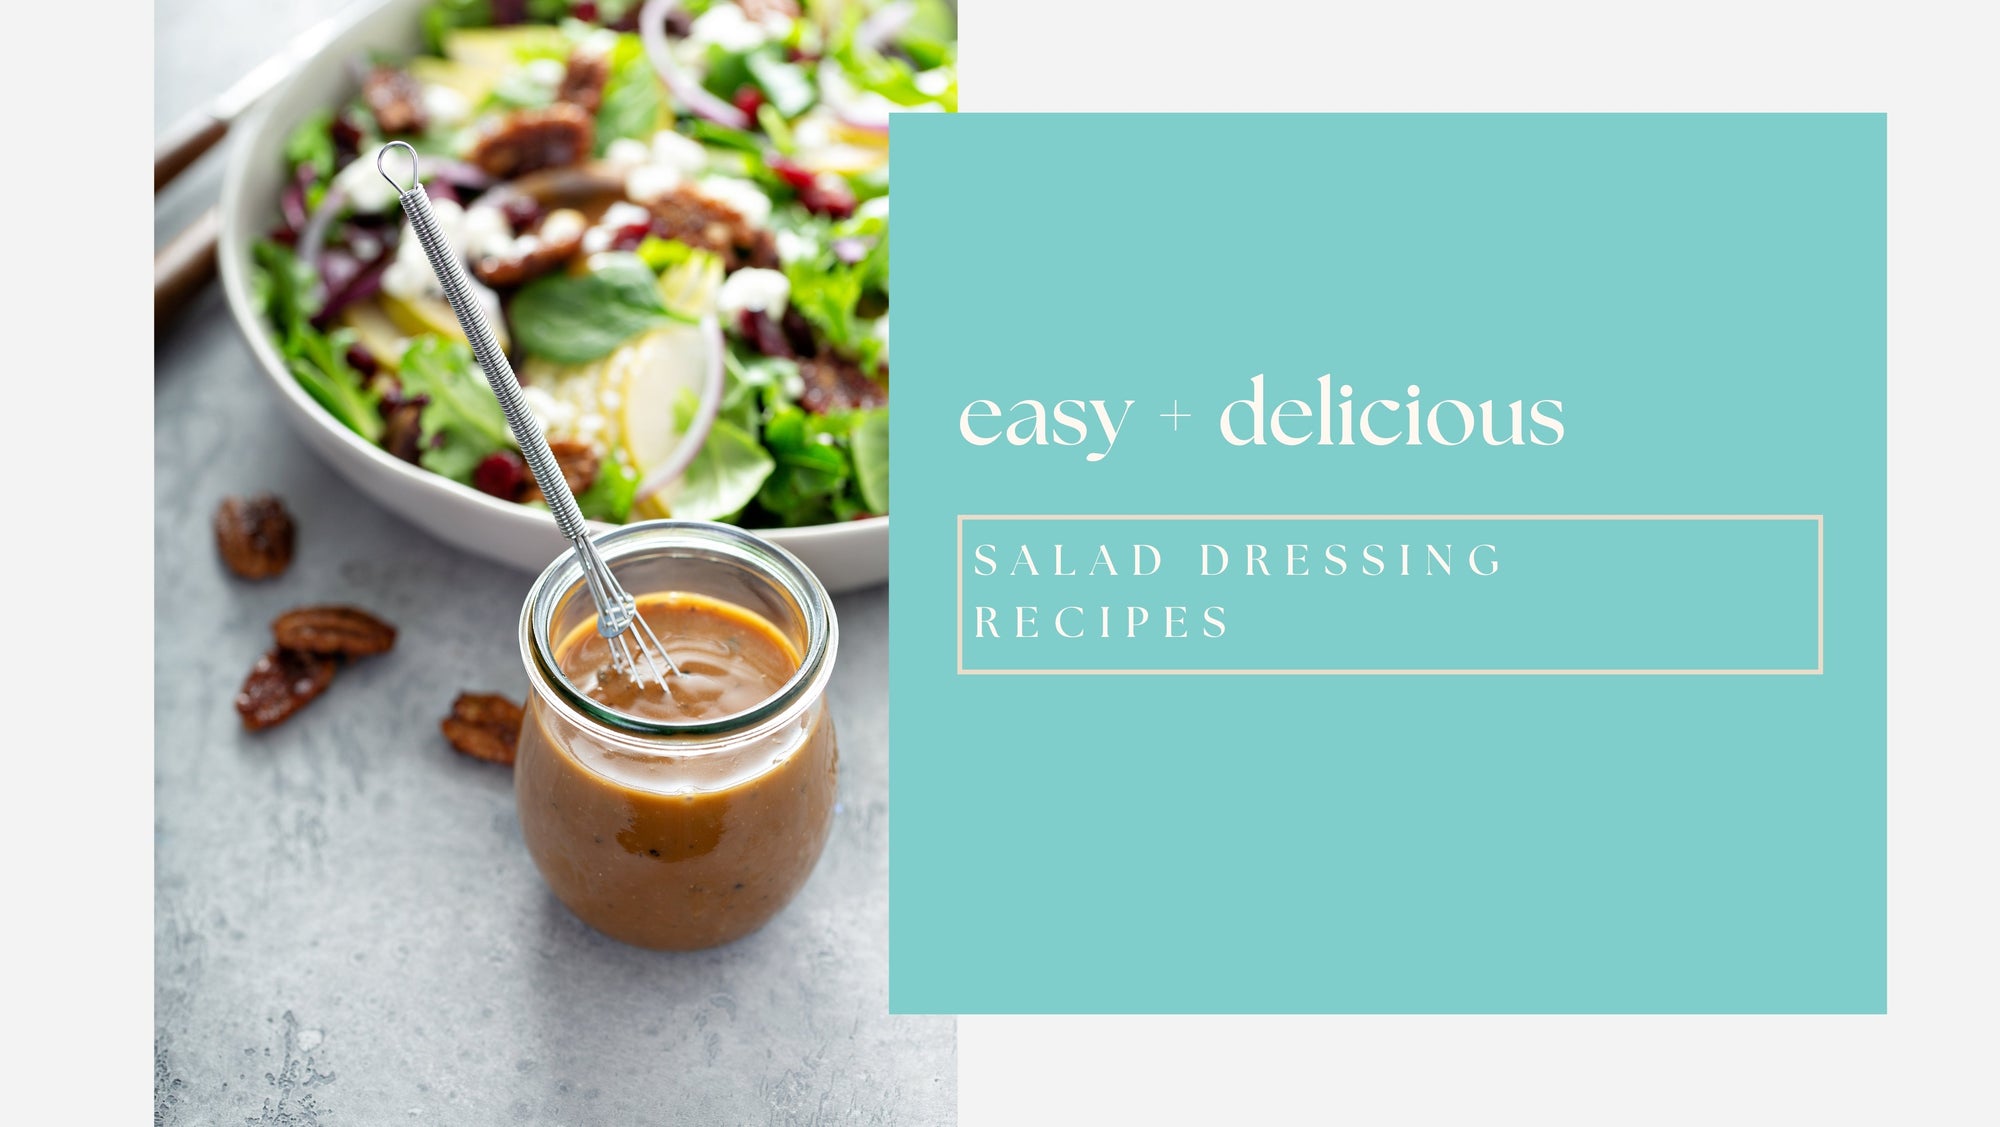 Easy, delicious salad dressing recipes